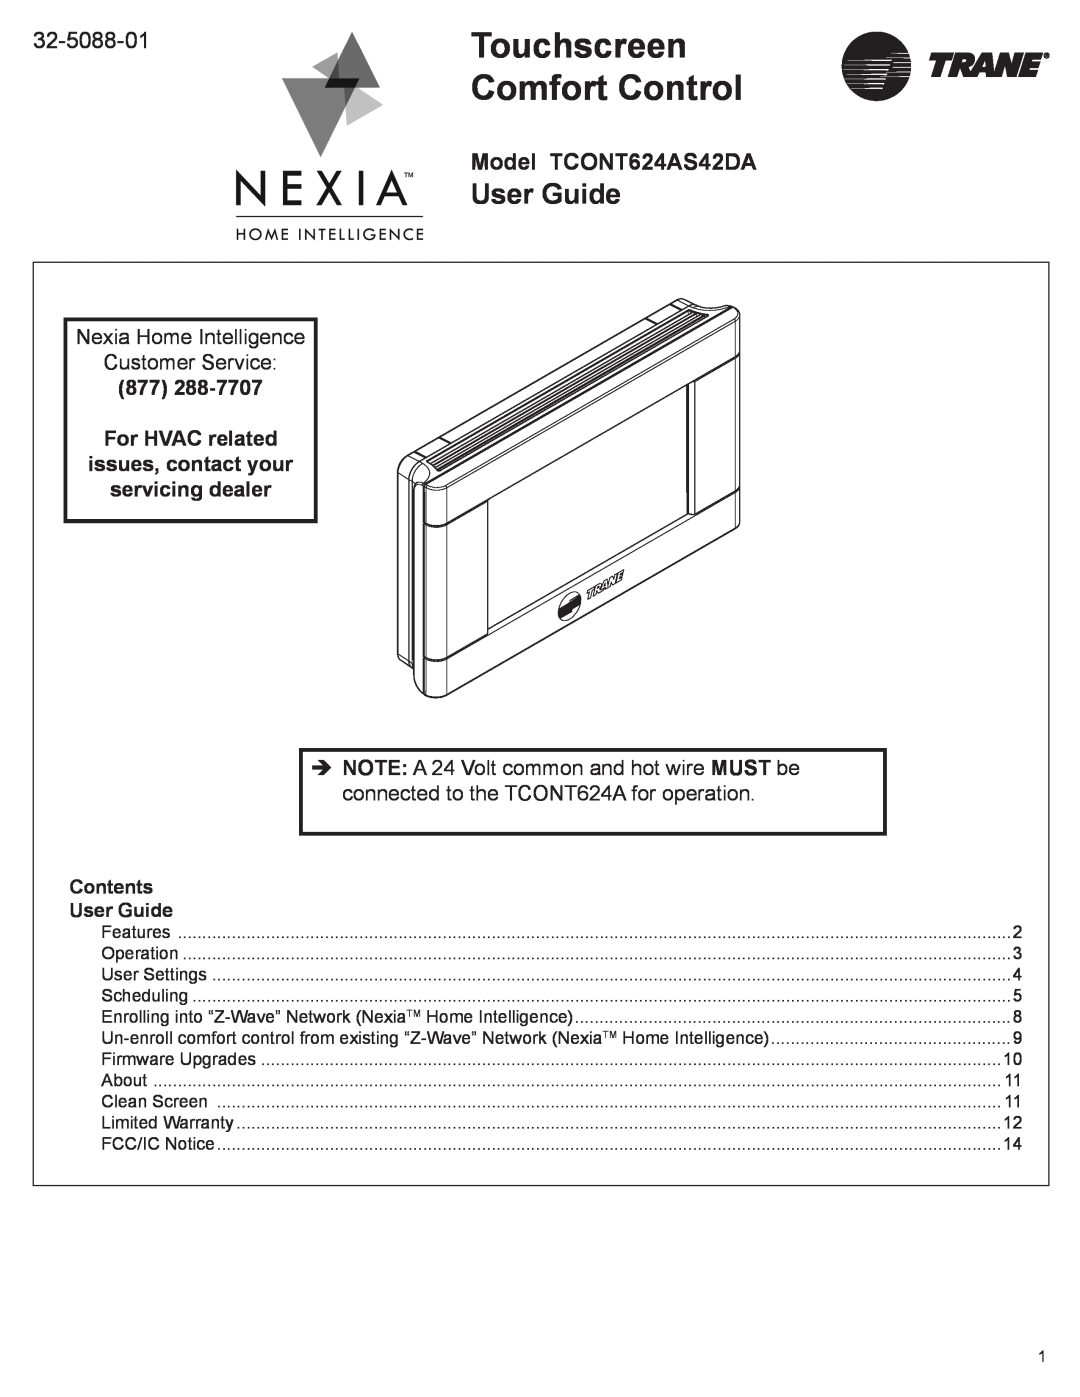 Trane Nexia Touch Screen Comfort Control warranty Touchscreen, User Guide, 32-5088-01, Model TCONT624AS42DA, Contents 